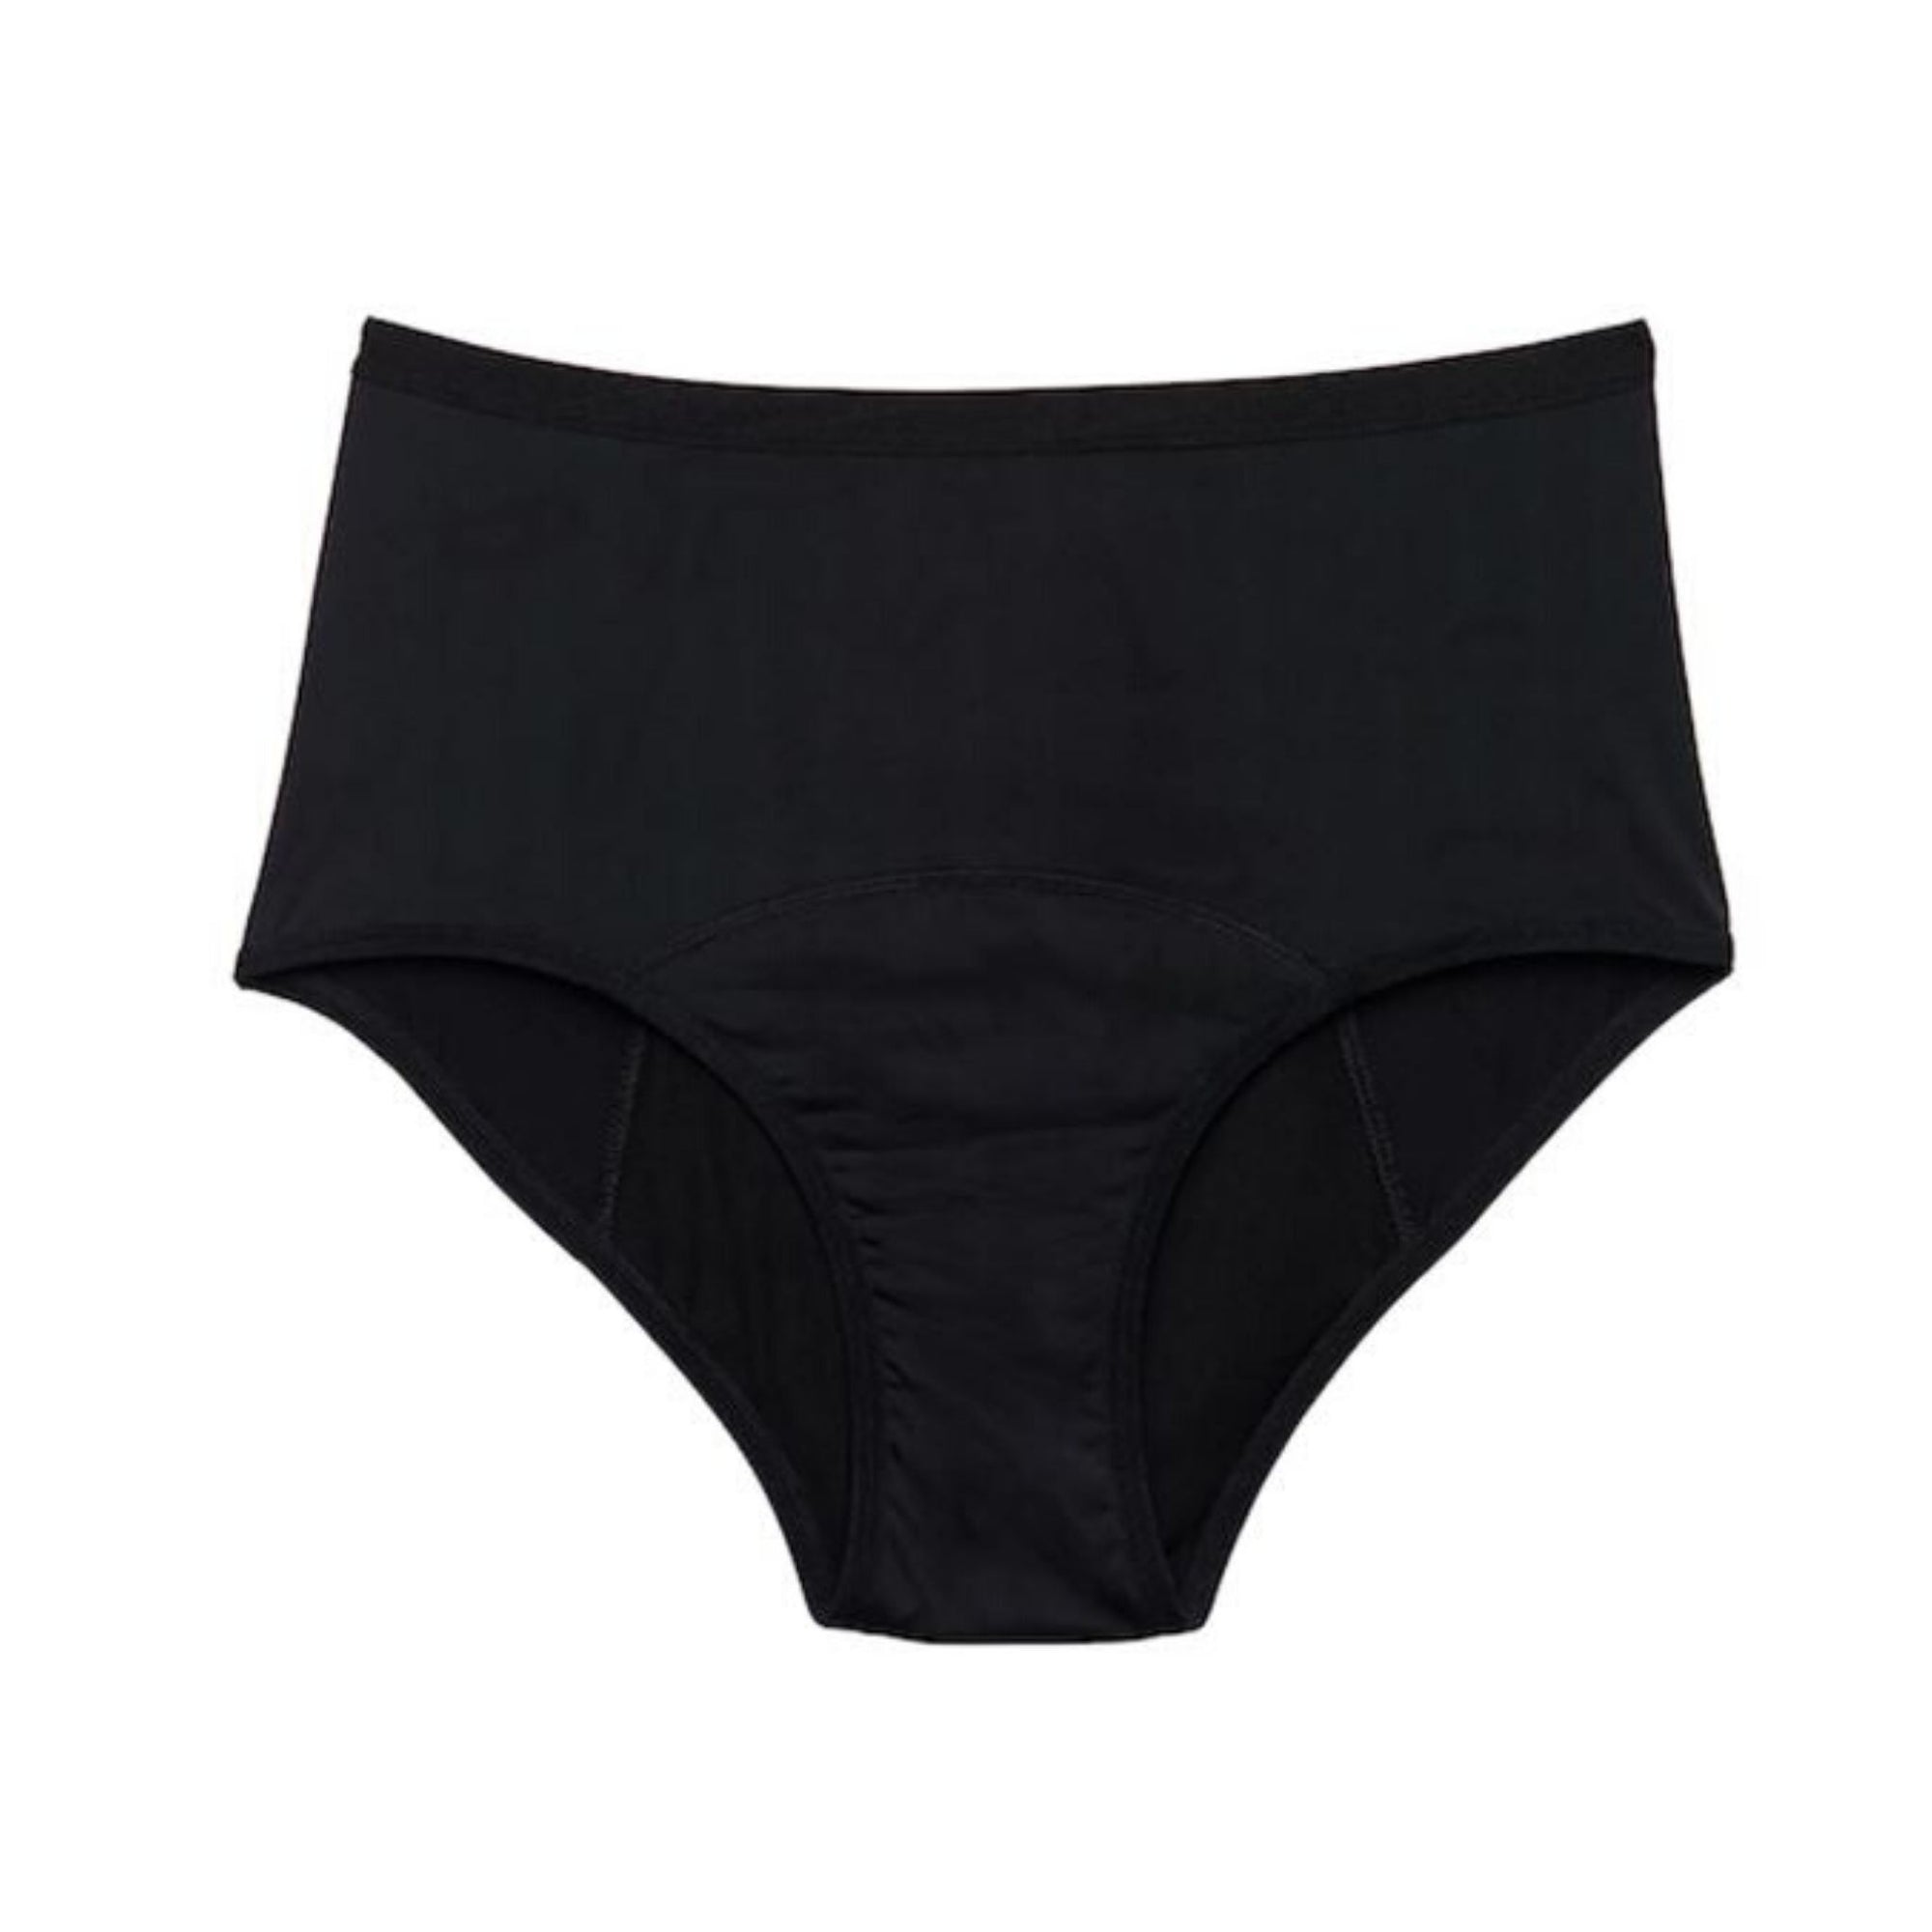 Go-For-Zero-Australia-Juju-Absorbent-Period-Underwear-Full-Brief-Light-Flow-3